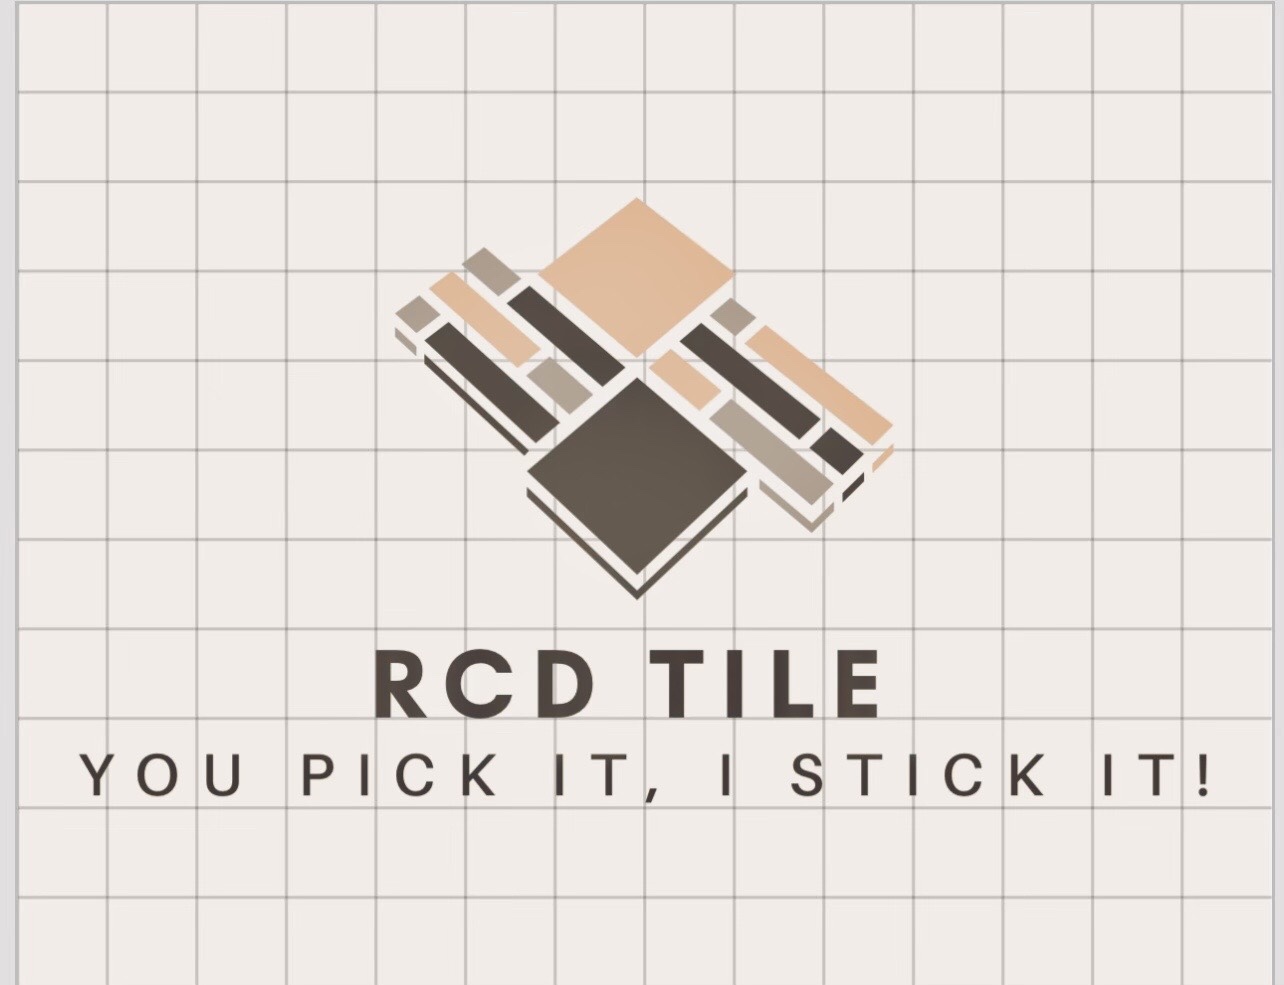 RCDTILE's logo